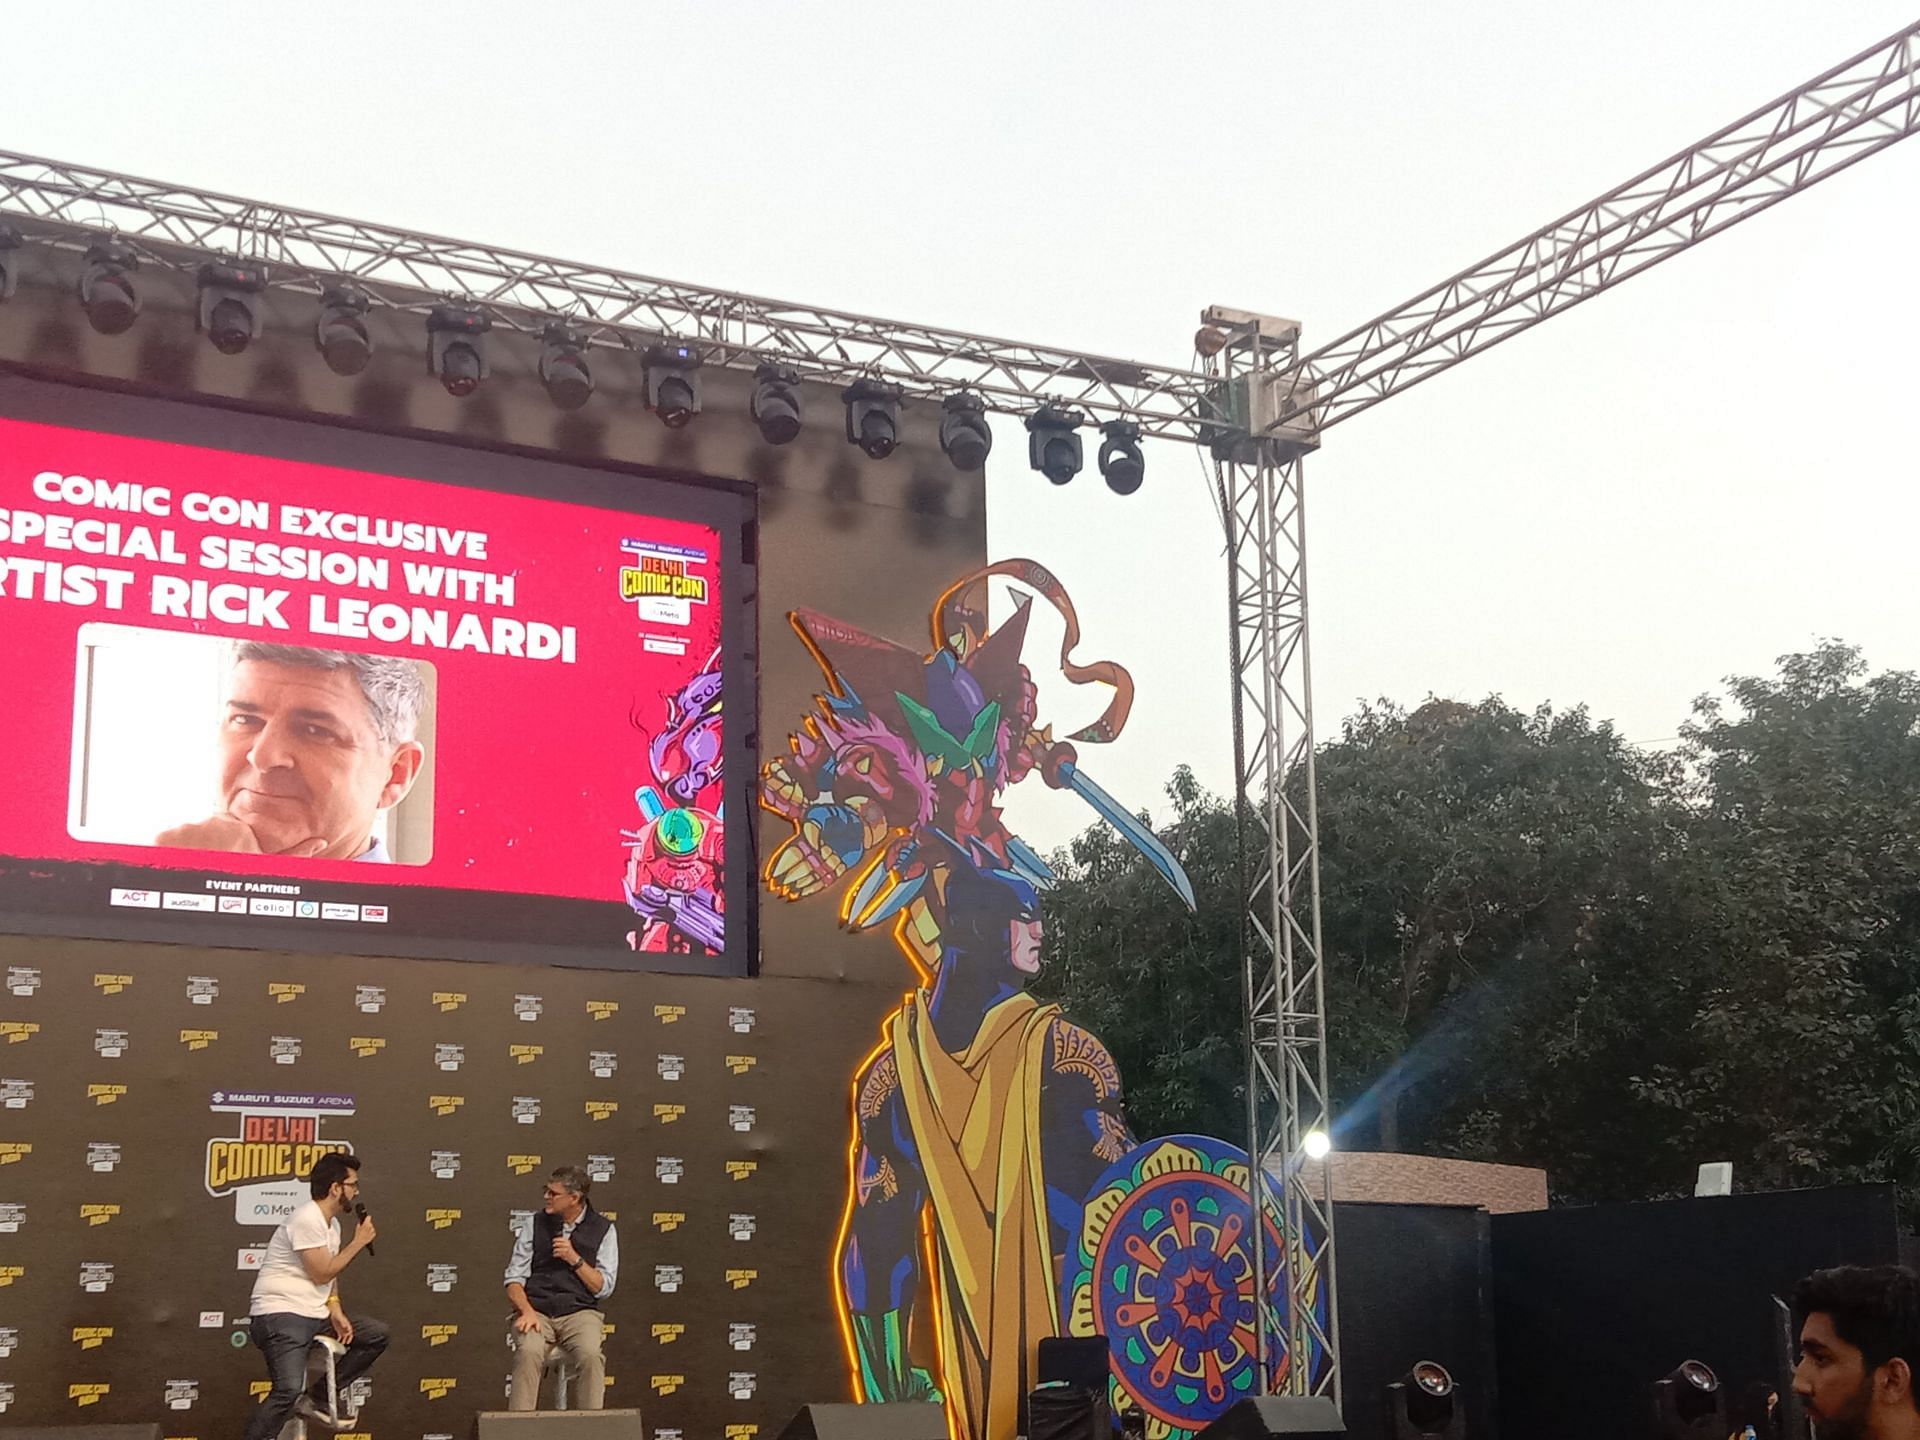 Rick Leonardi in the Special Session at Delhi Comic Con 2022 (Image via Sportskeeda)